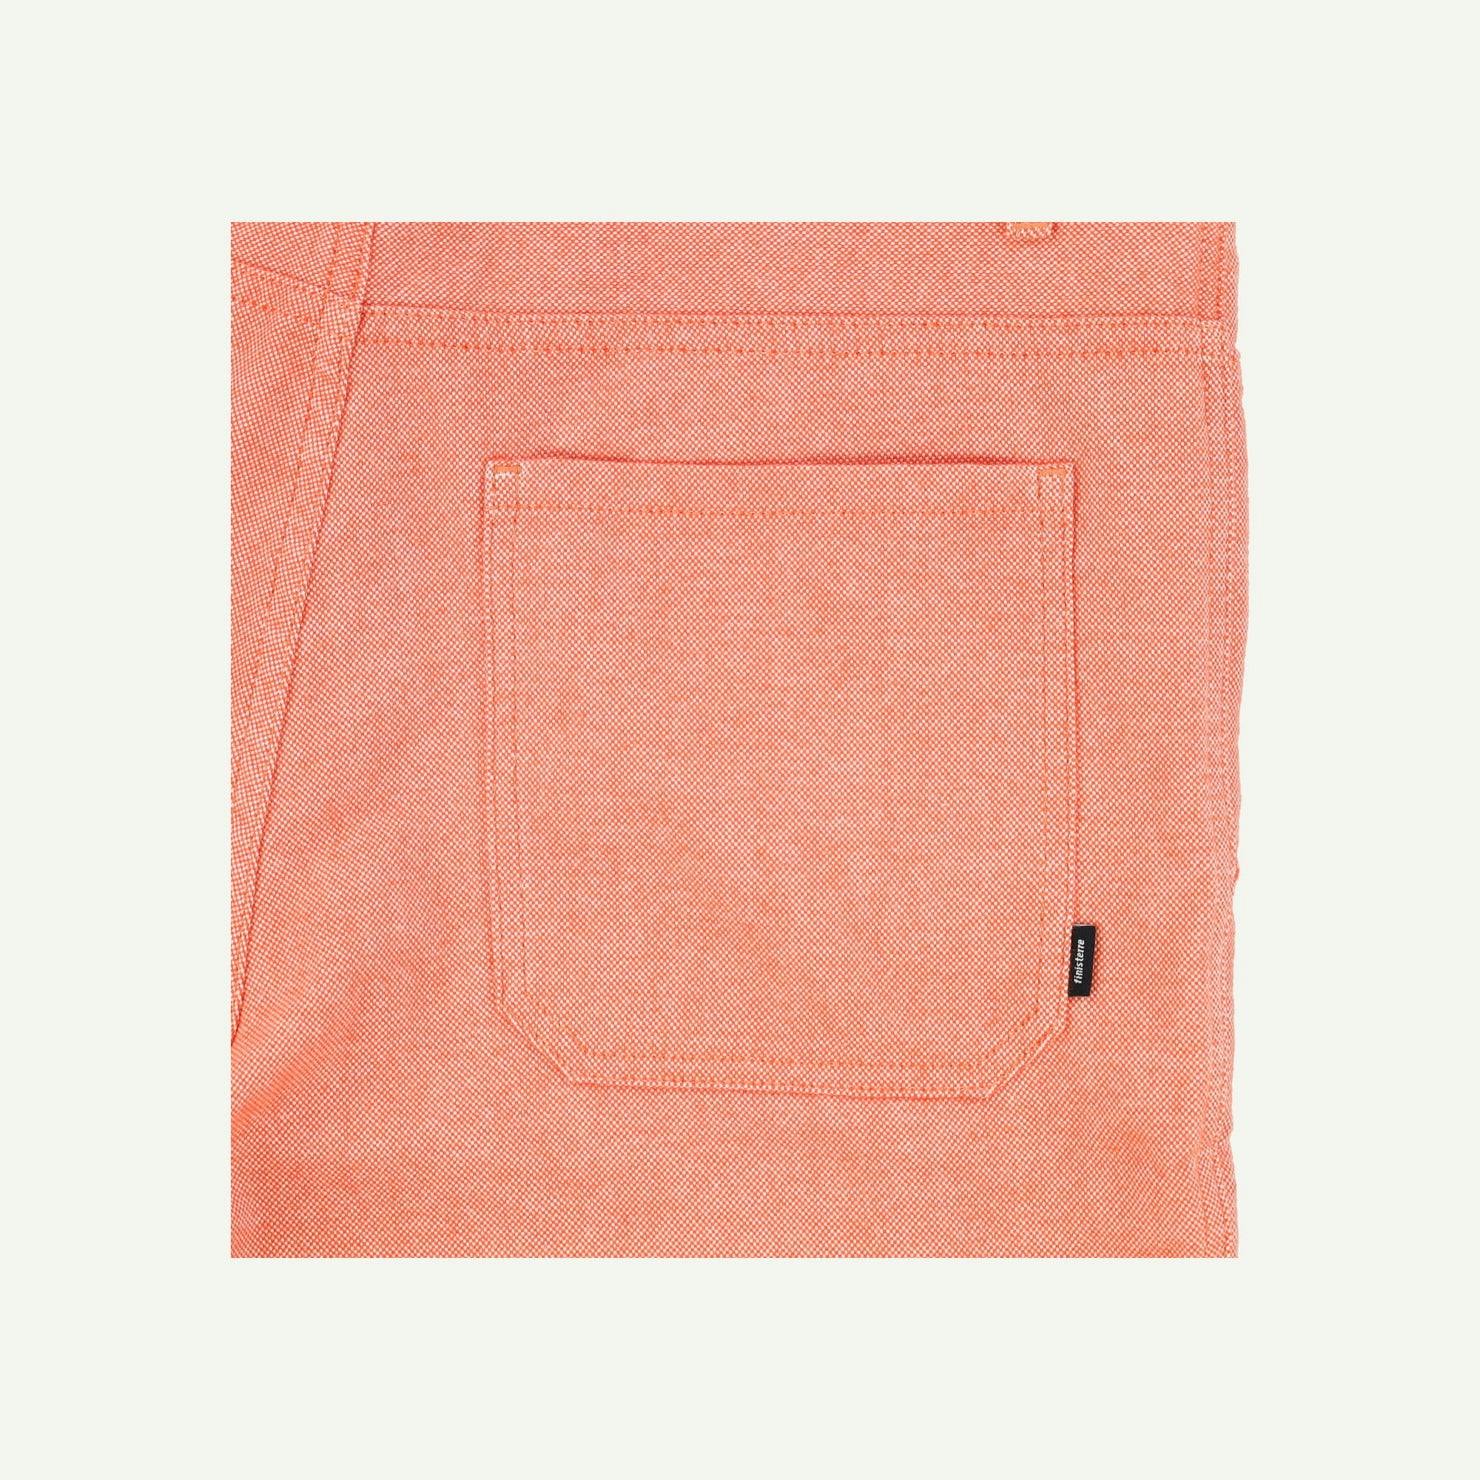 Finisterre Brand new Orange Shorts